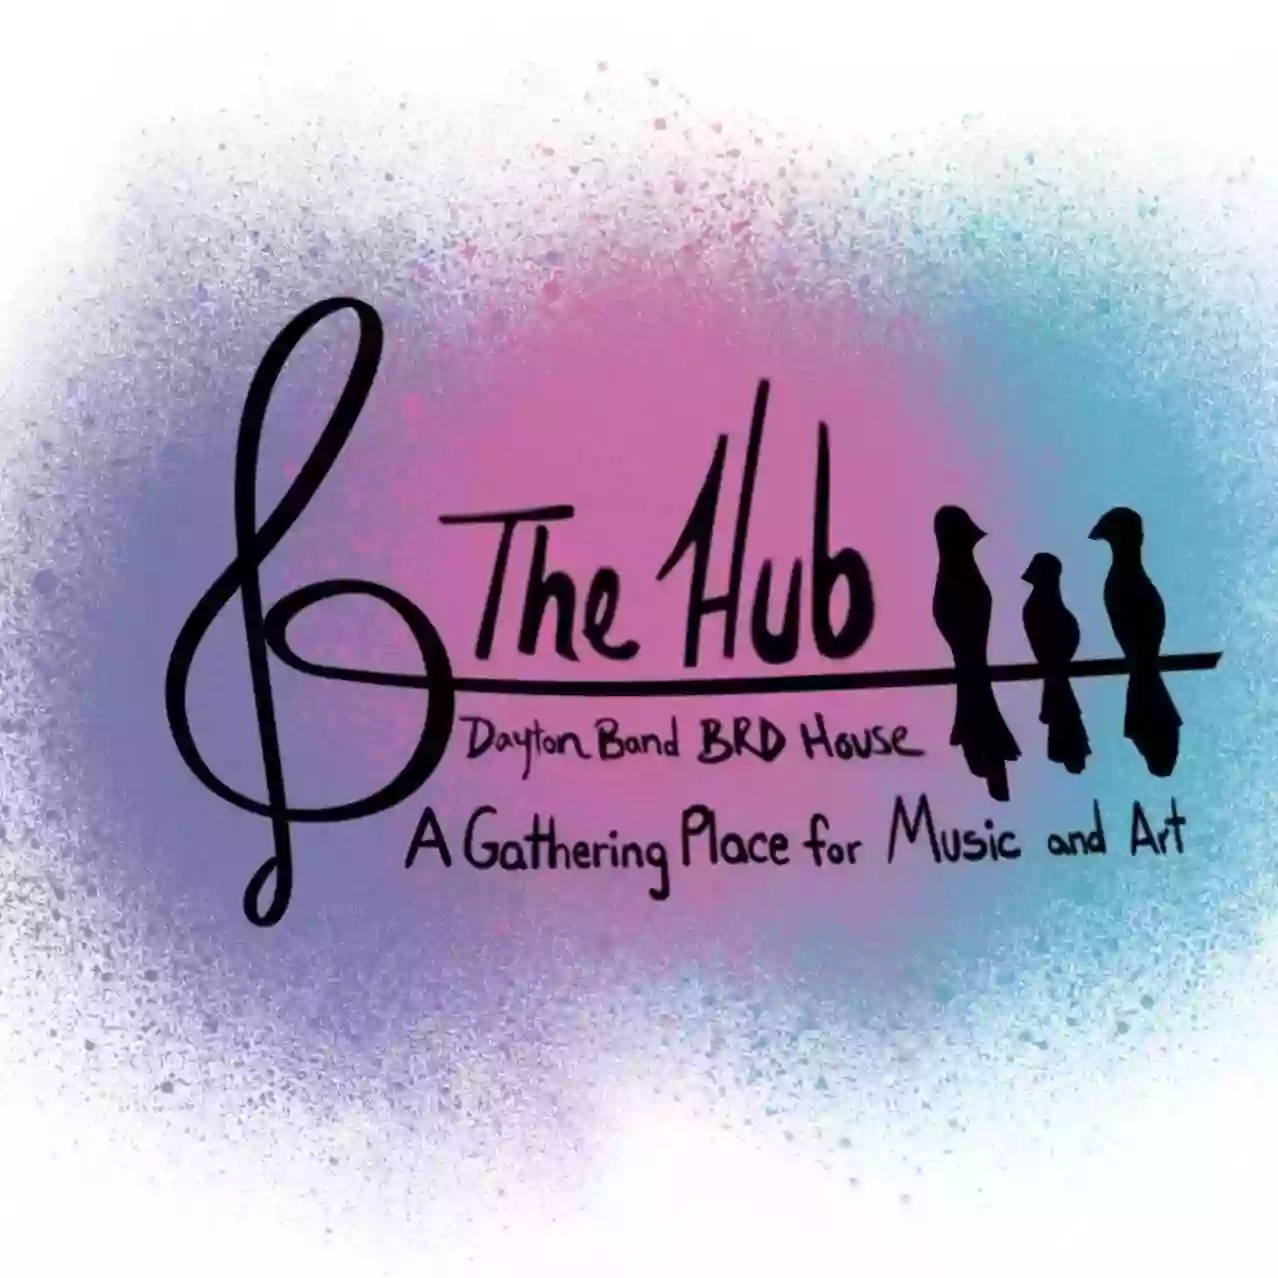 The Hub Dayton Band BRD House